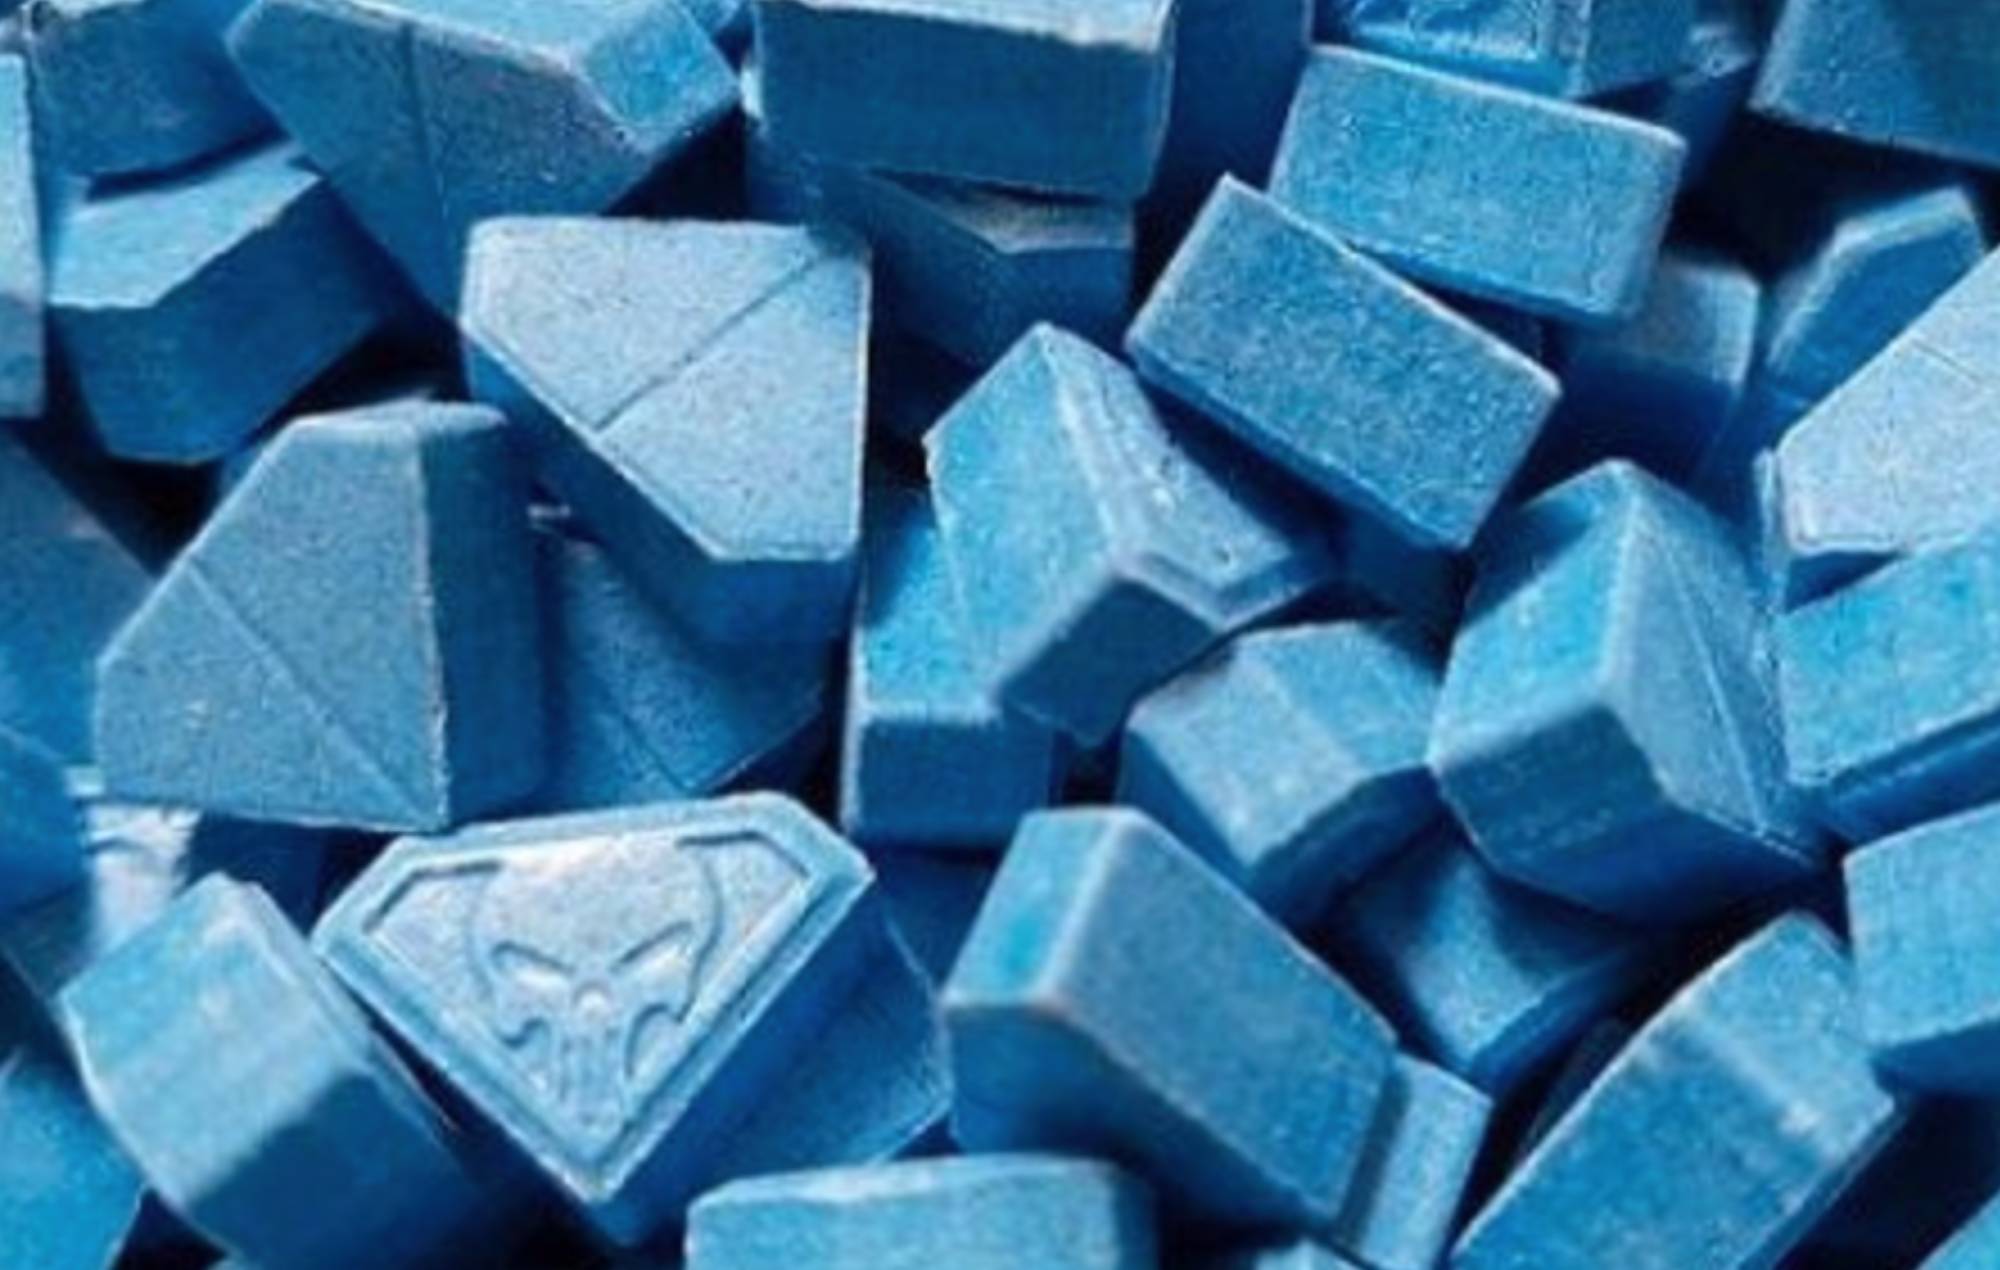 Warning issued over “super strength” ecstasy pills at Glastonbury 2024